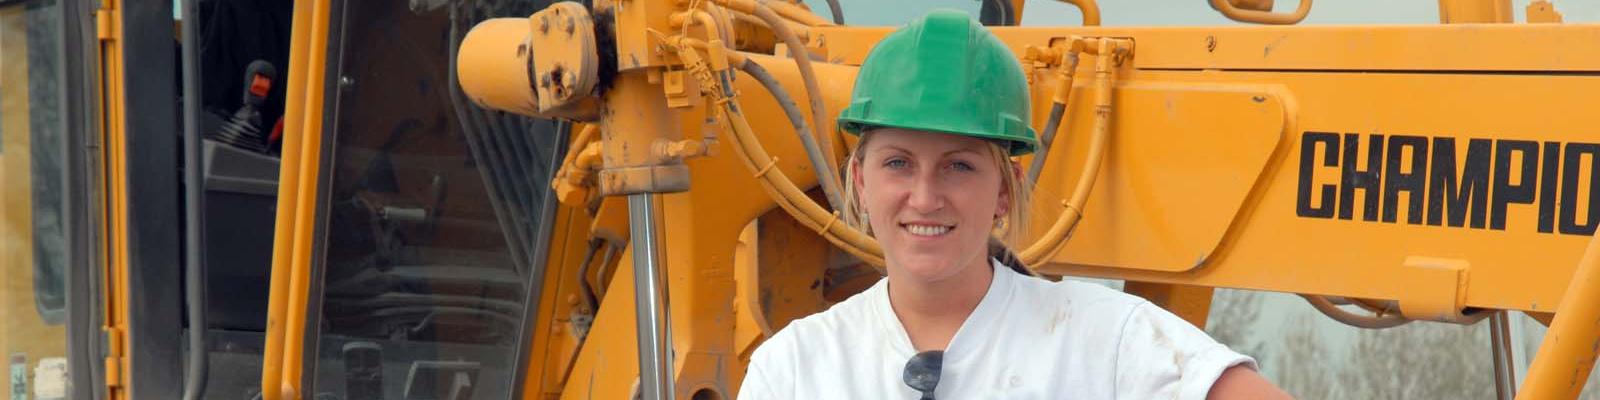 Woman heavy equipment operator construction worker